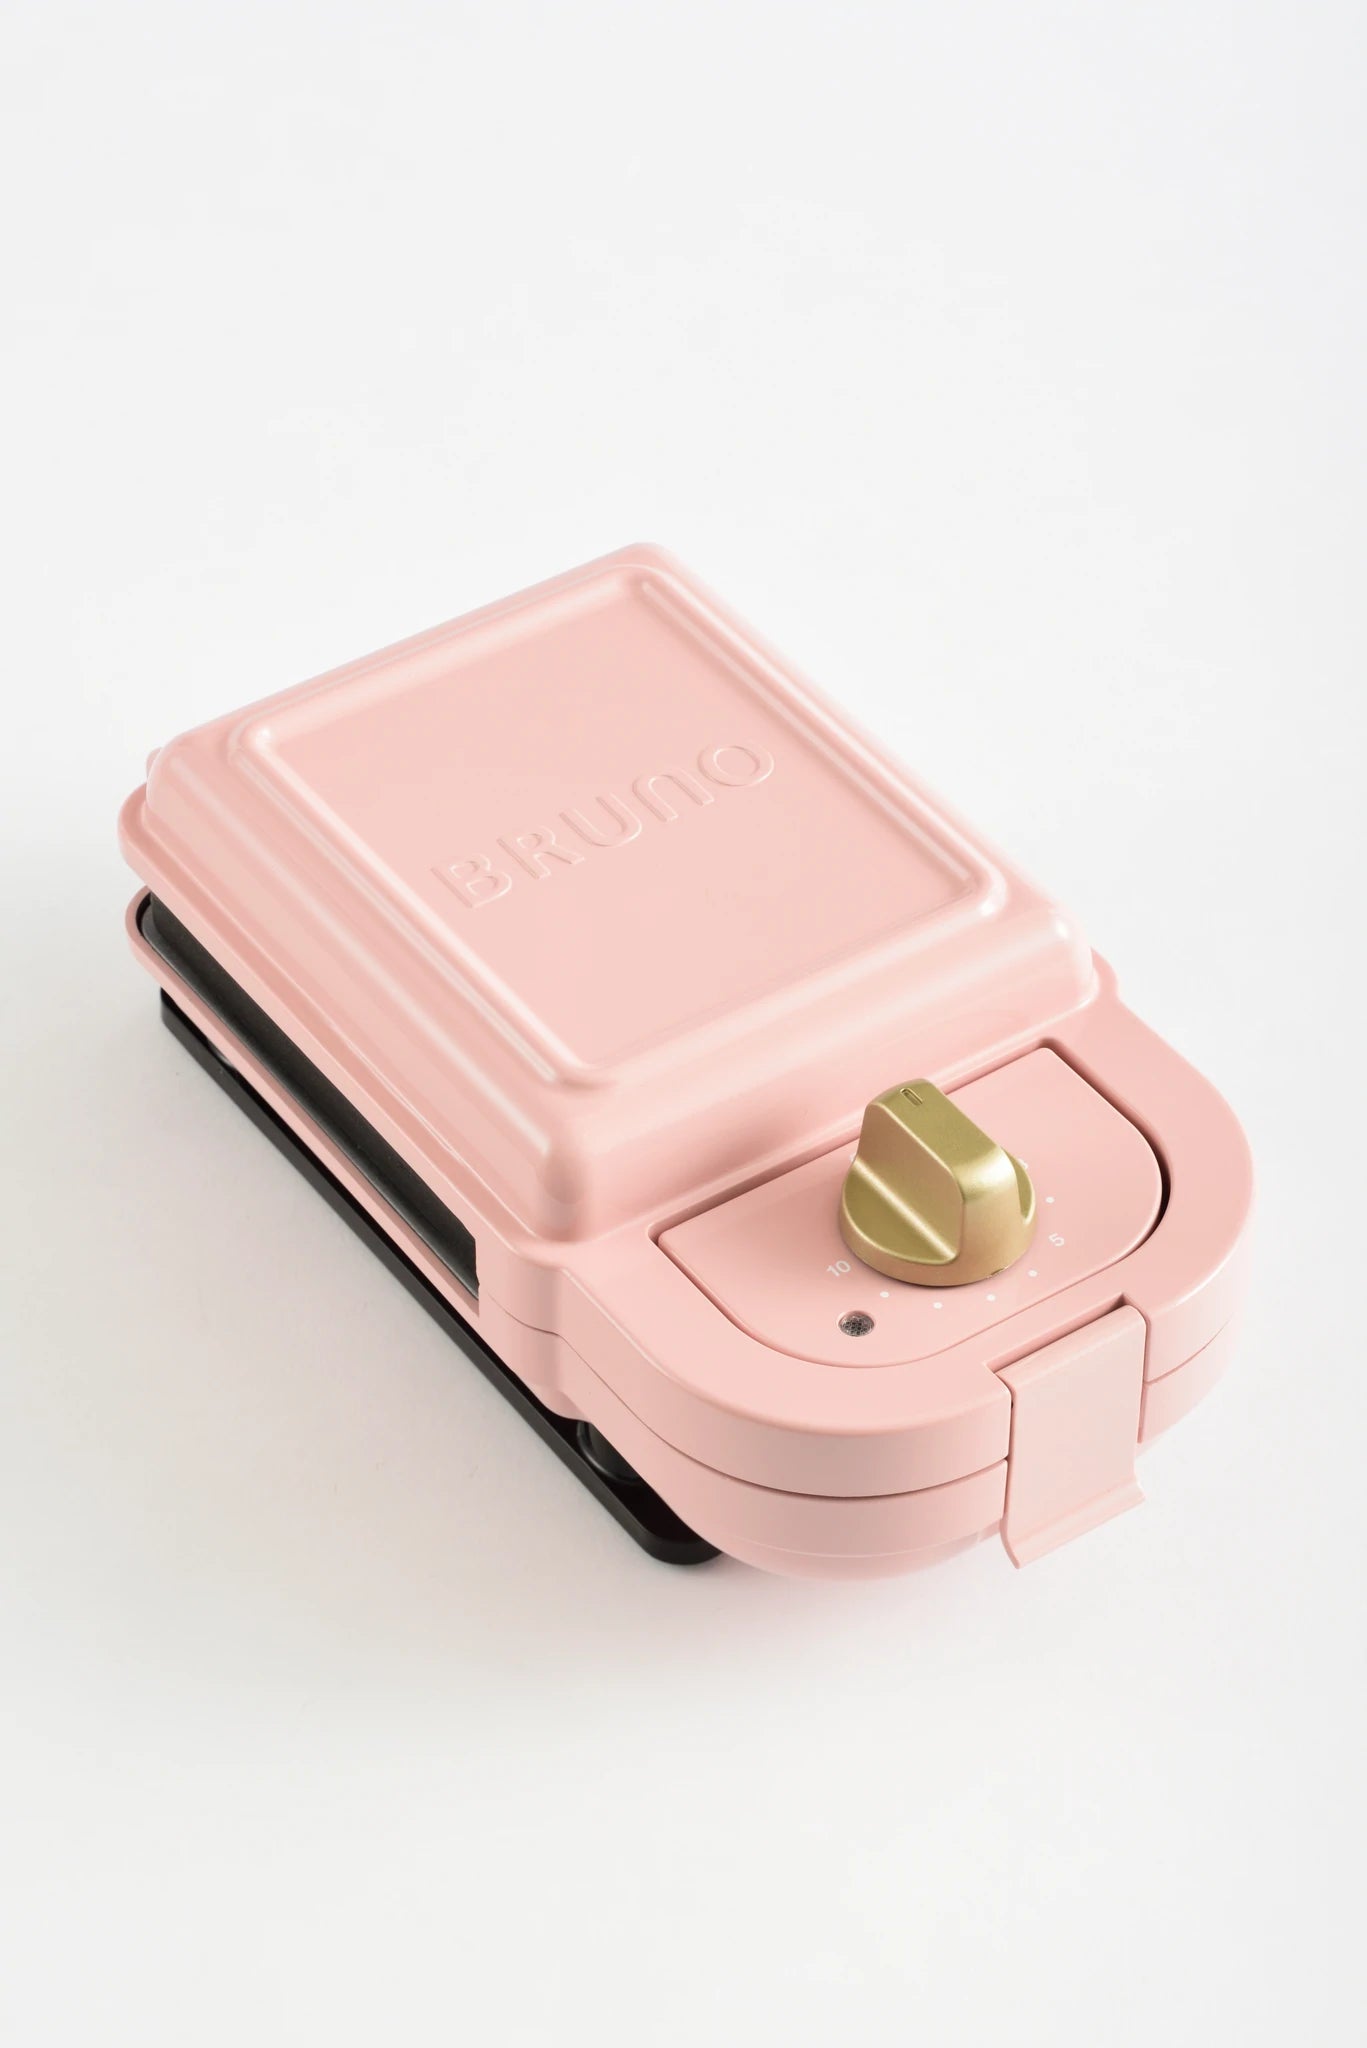 BRUNO Single Hot Sandwich Maker bundled with 6 plates - Pale Pink